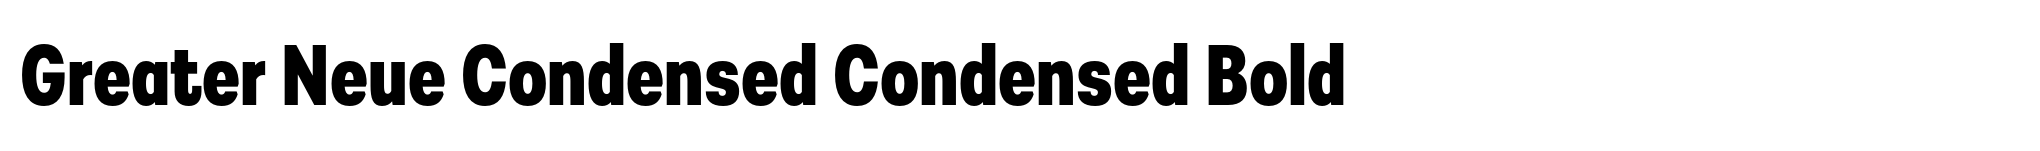 Greater Neue Condensed Condensed Bold image